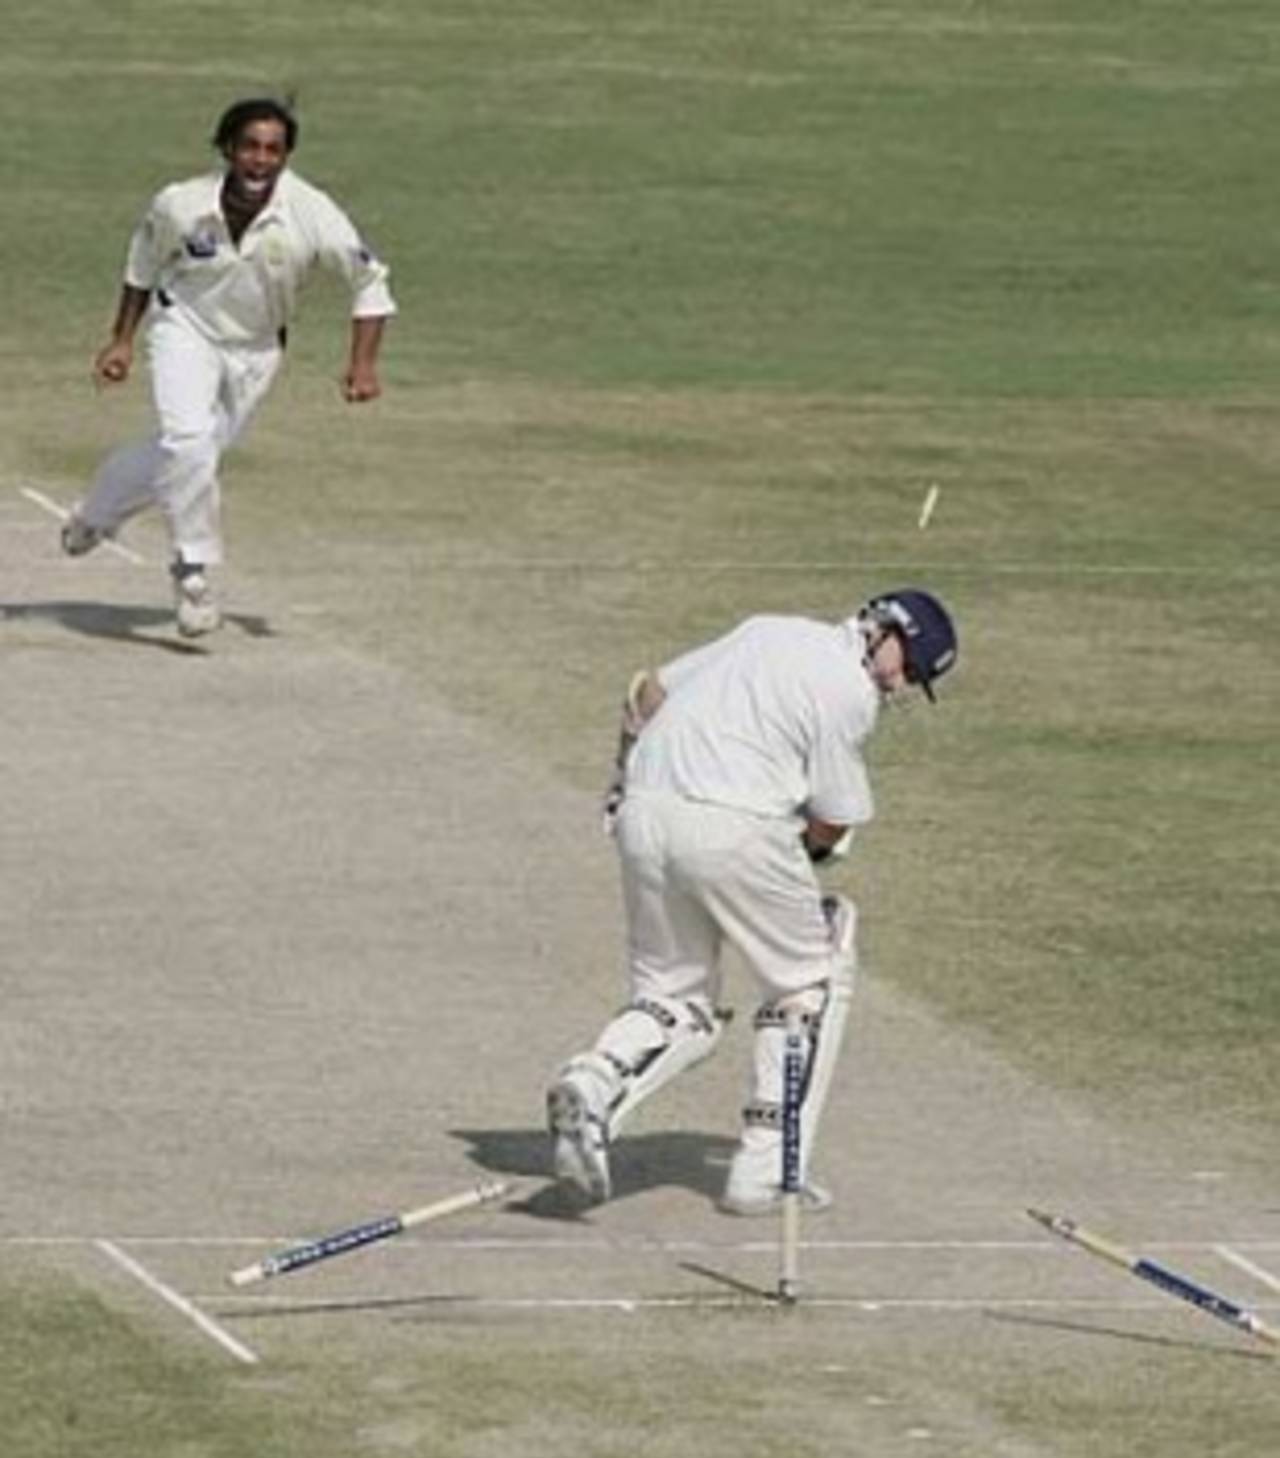 Shoaib Akhtar's yorker is too good for Ashley Giles, Pakistan v England, 1st Test, Multan, November 16, 2005